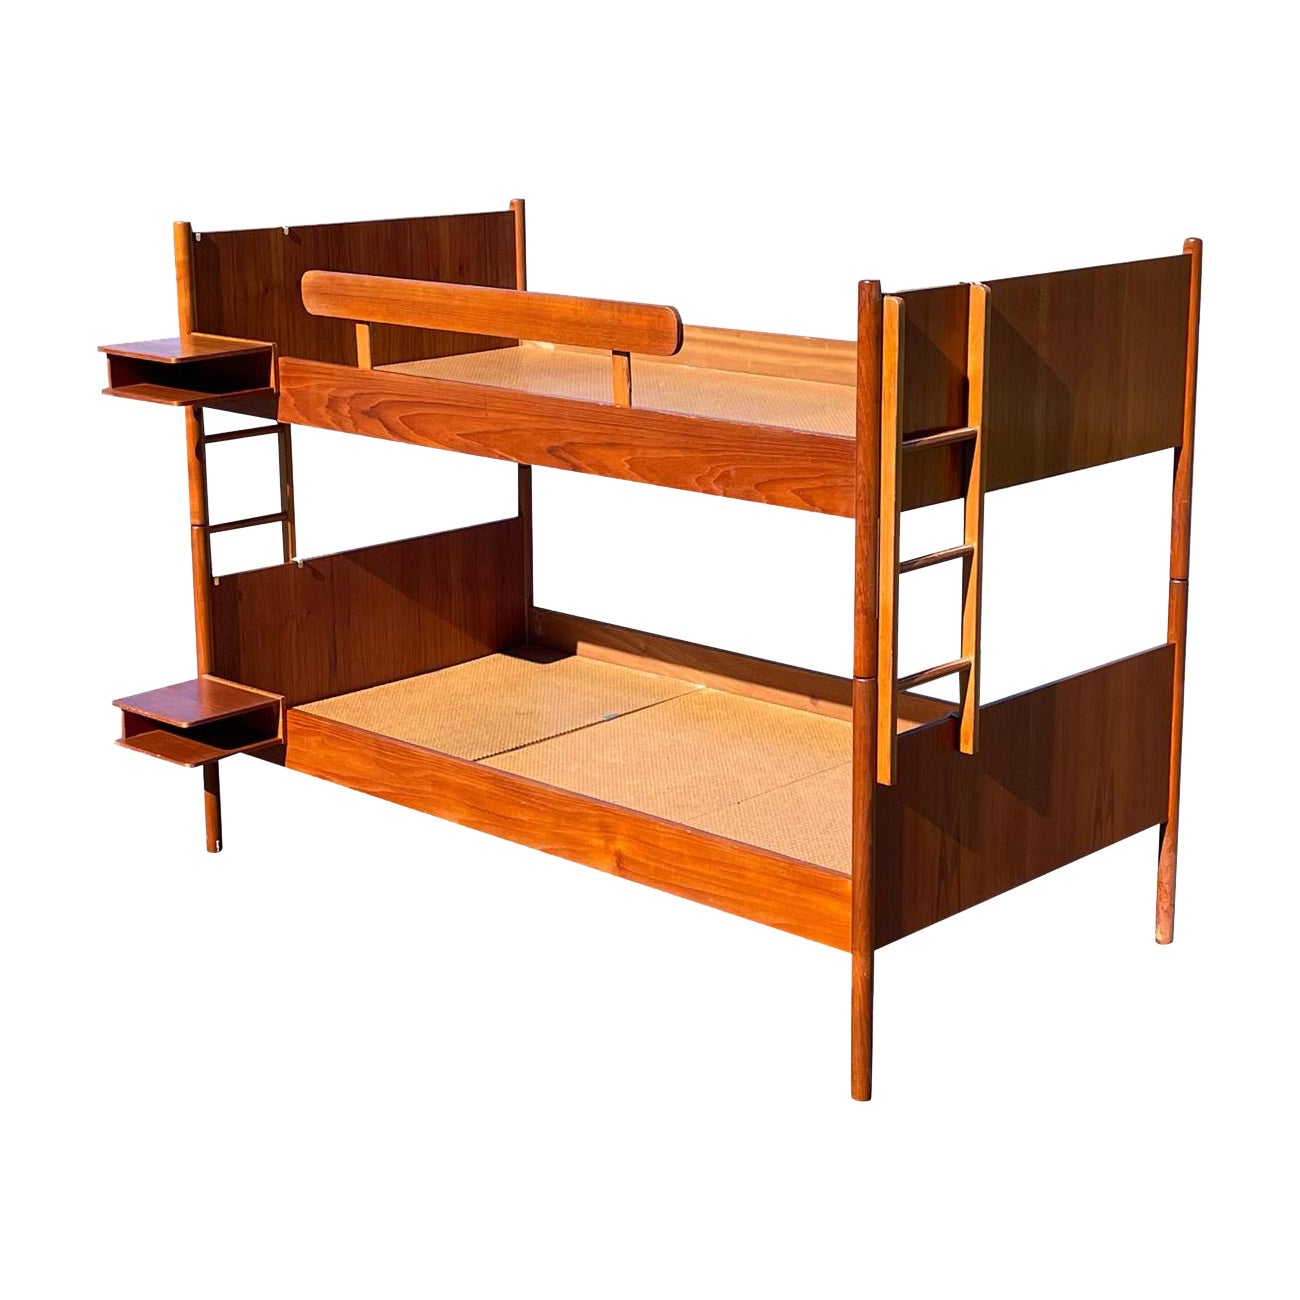 1960s Mid Century Danish Modern Teak Bunk Beds With Ladders & Shelving 